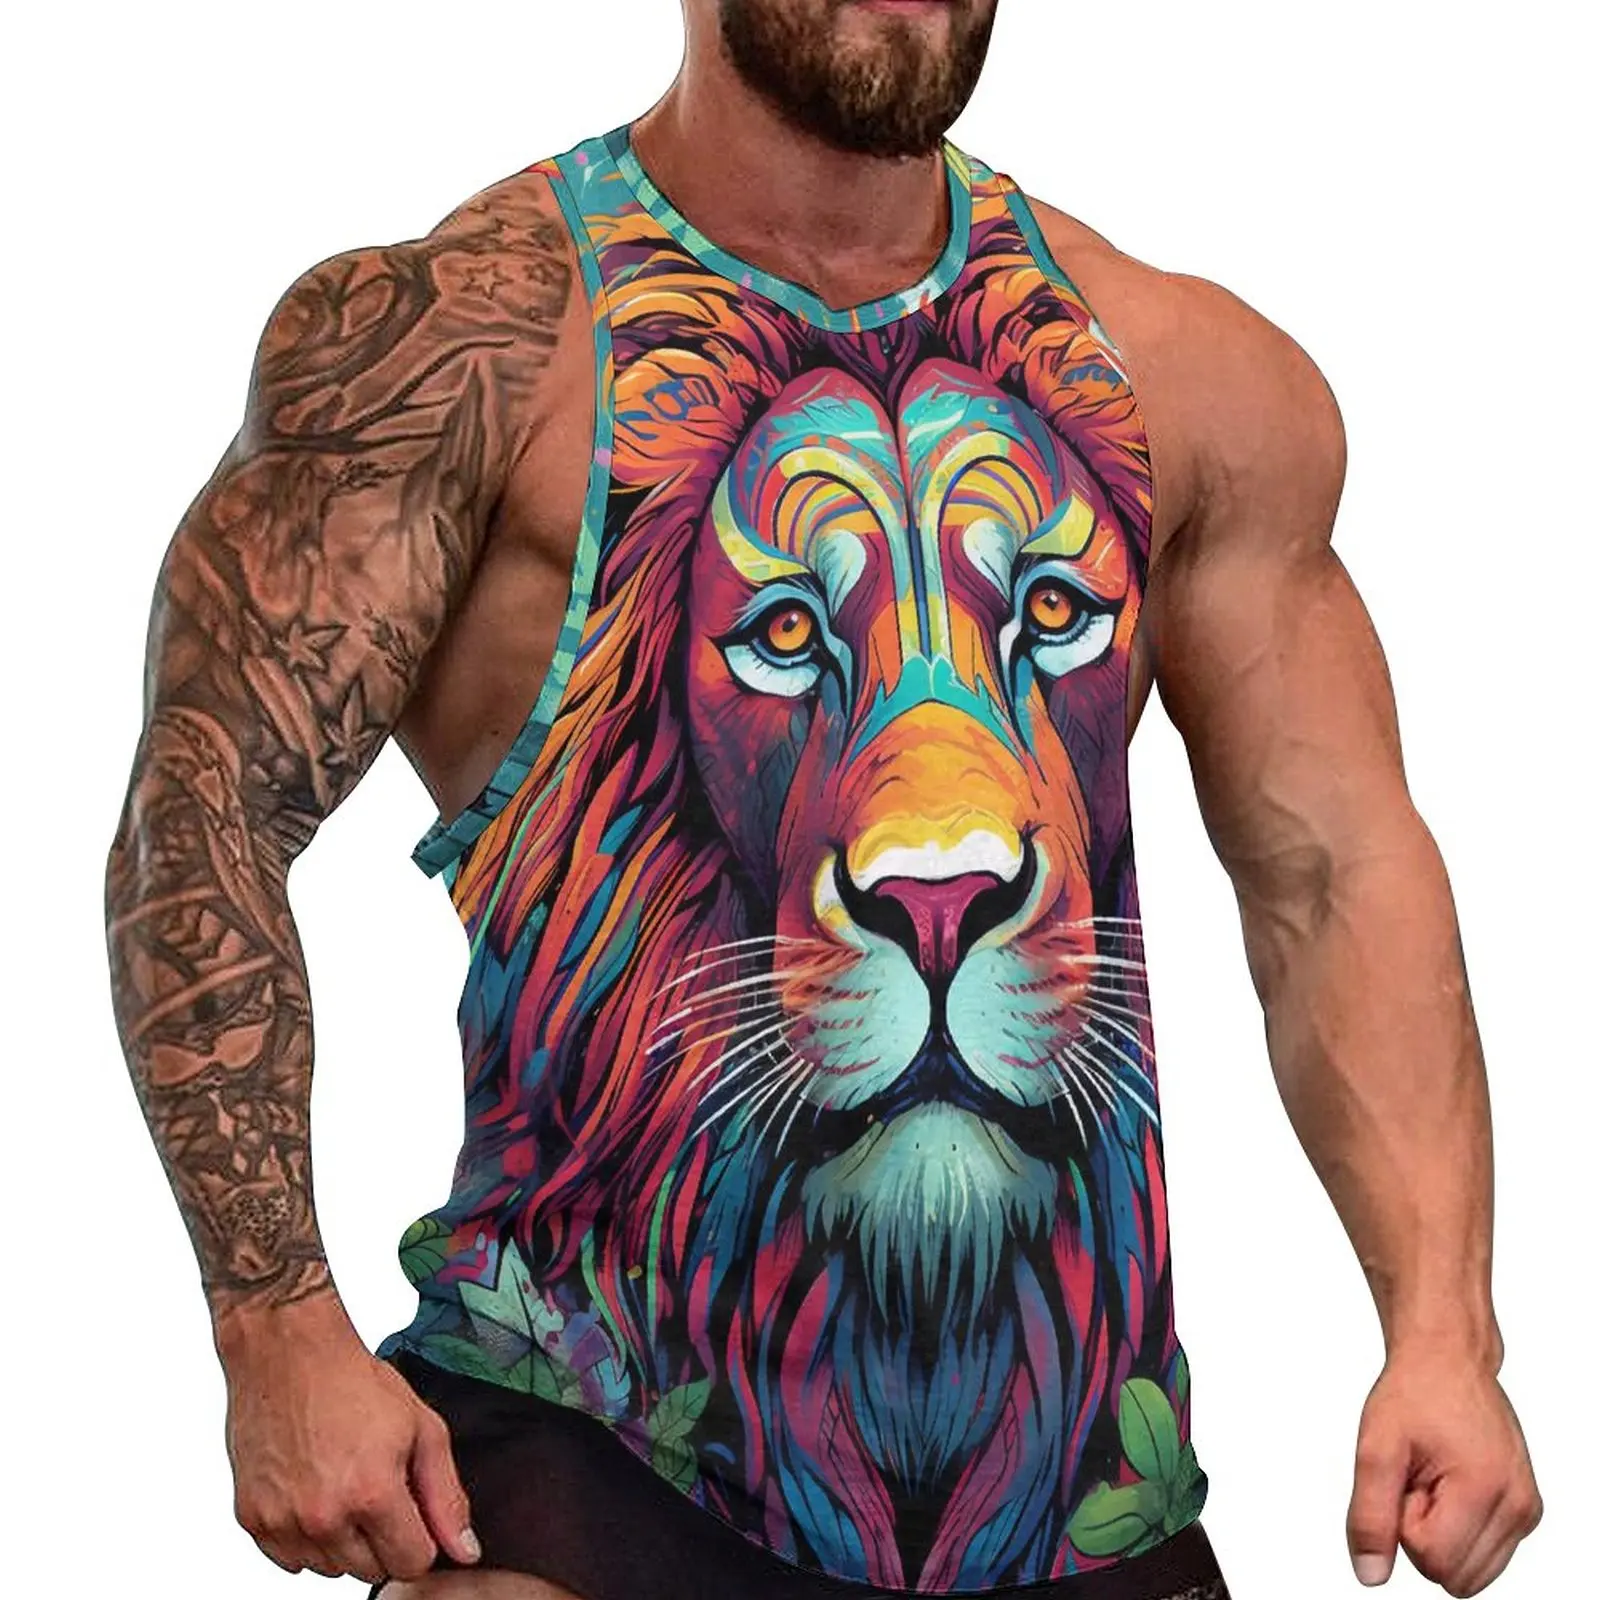 

Lion Summer Tank Top Visual Impact Wall Graffiti Bodybuilding Tops Mens Design Sportswear Sleeveless Shirts Big Size 4XL 5XL